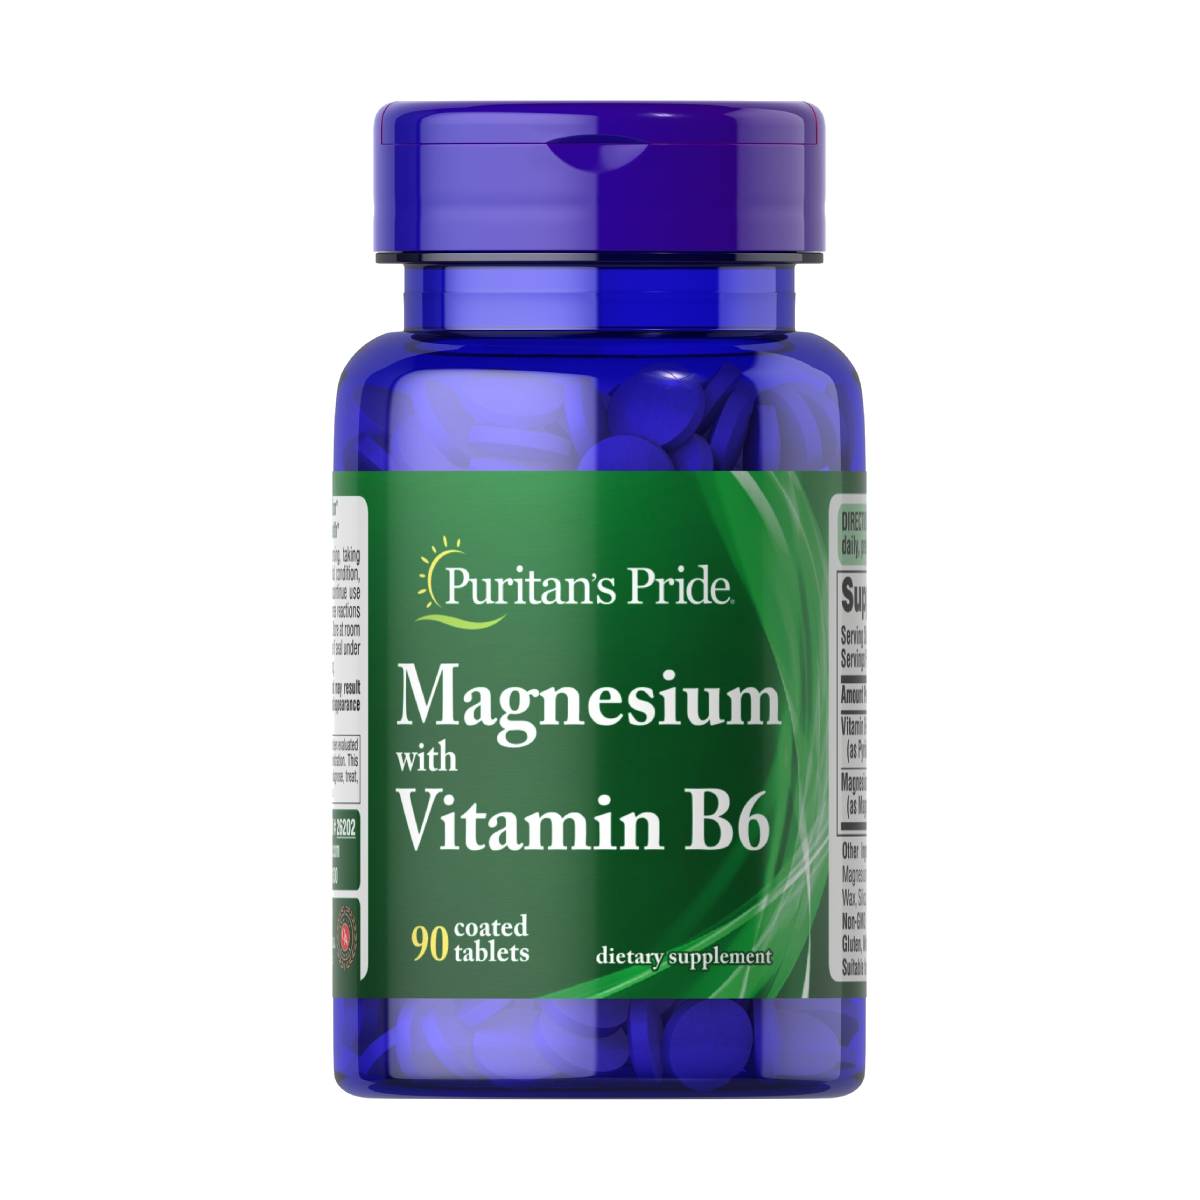 Puritan's Pride, Magnesium 400mg with Vitamin B6 25mg | Puritans Pride, Magnesio 400mg con Vitamina B6 25mg